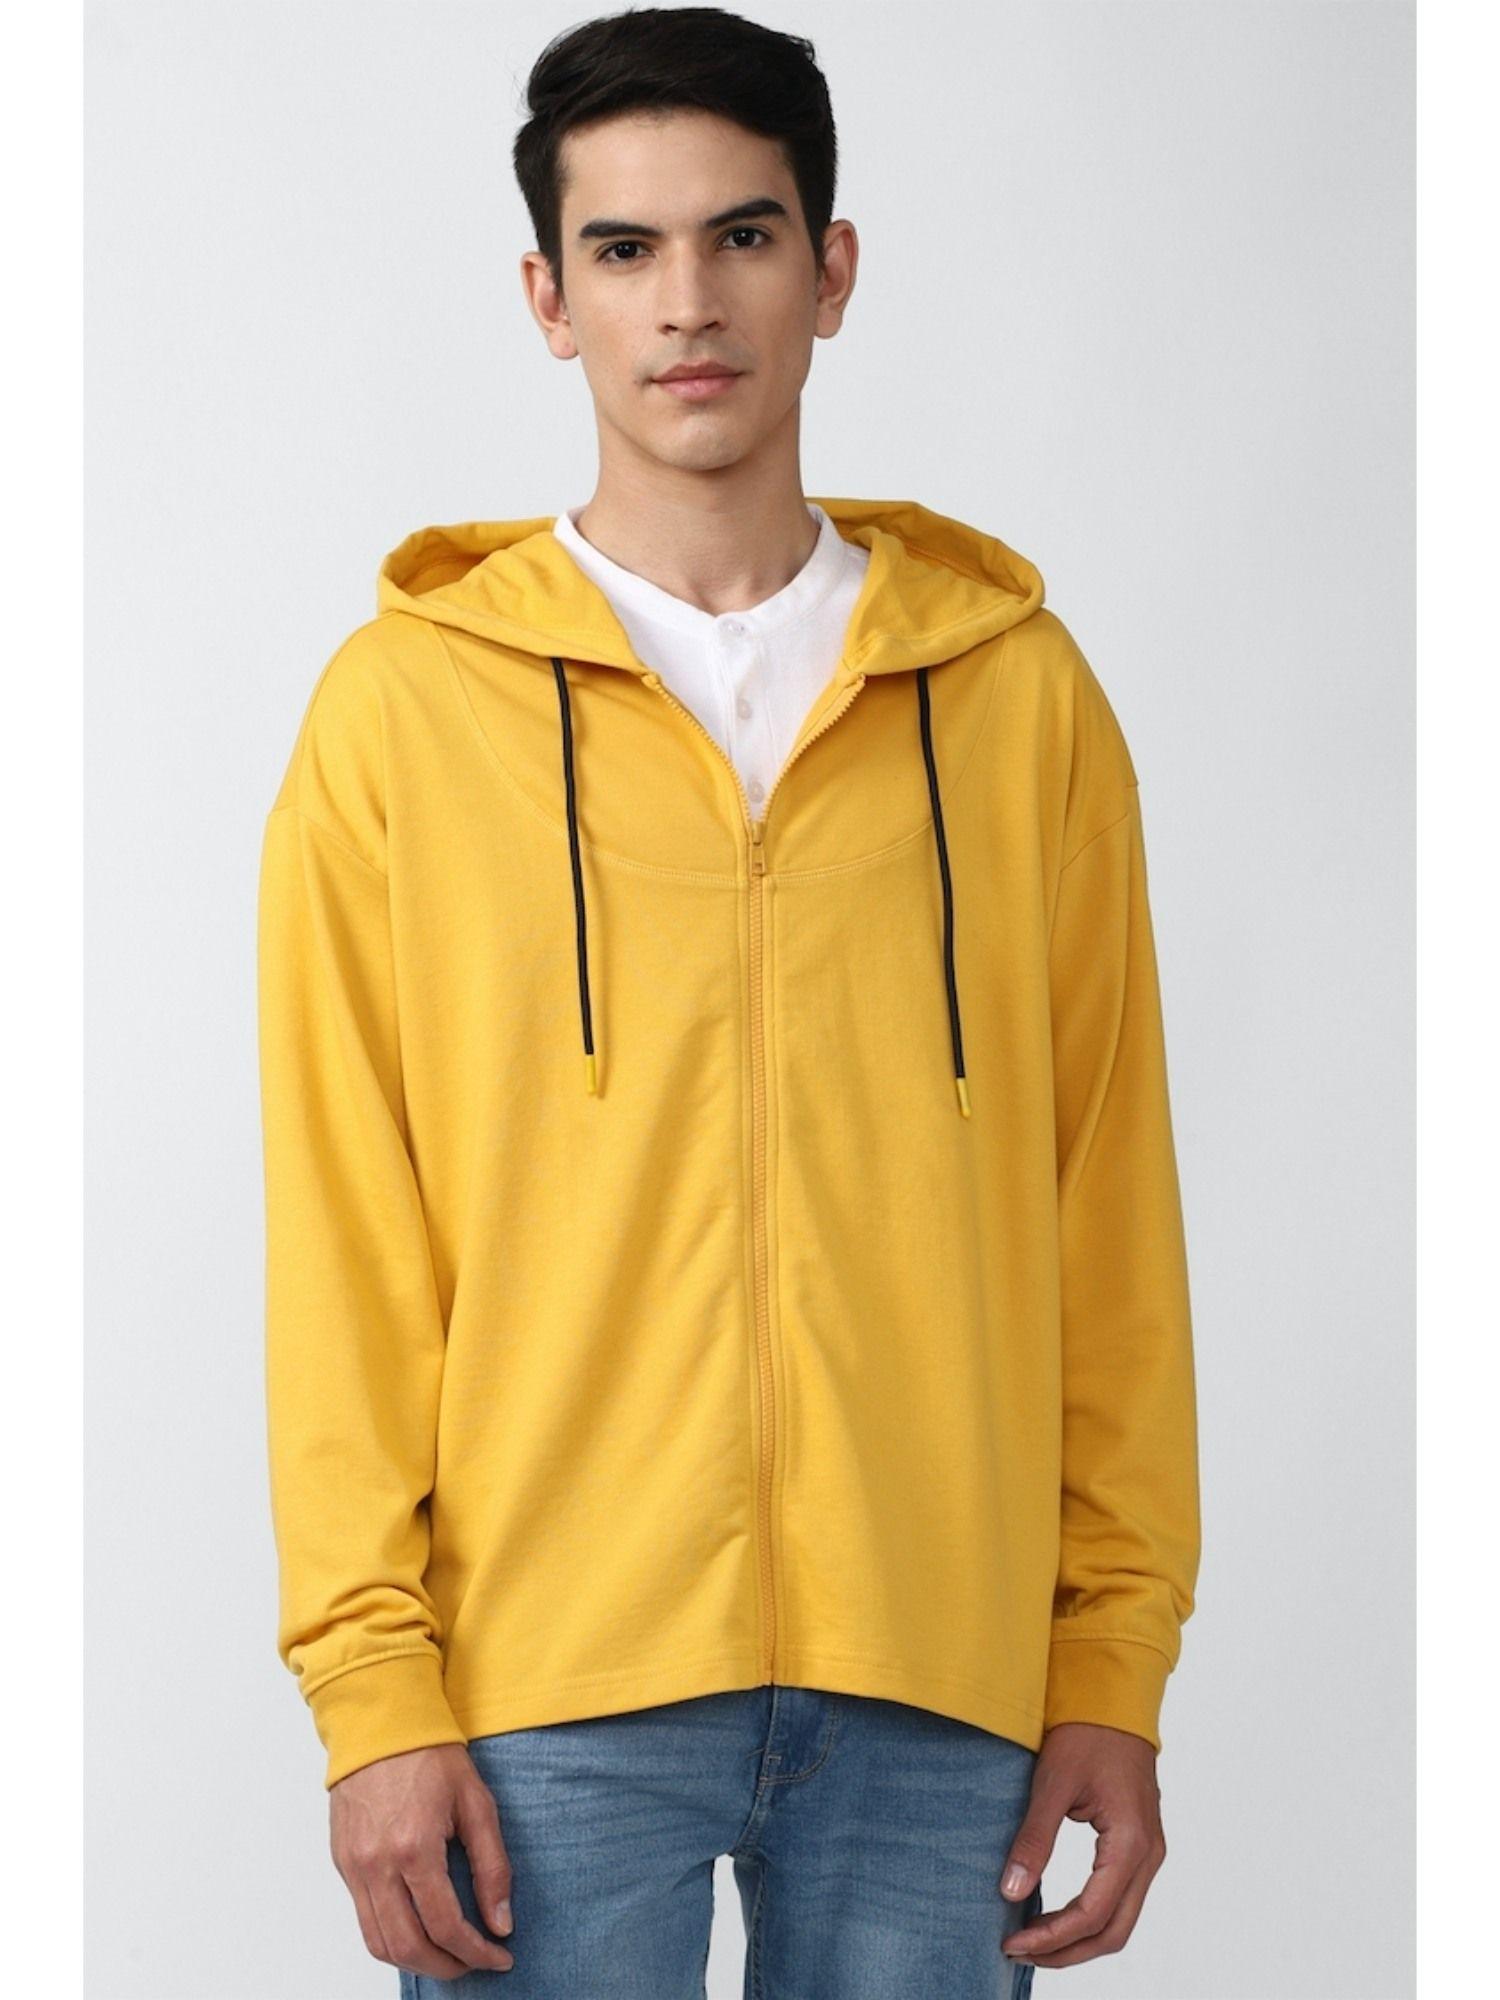 Solid Yellow Solid Sweatshirts And Hoodies